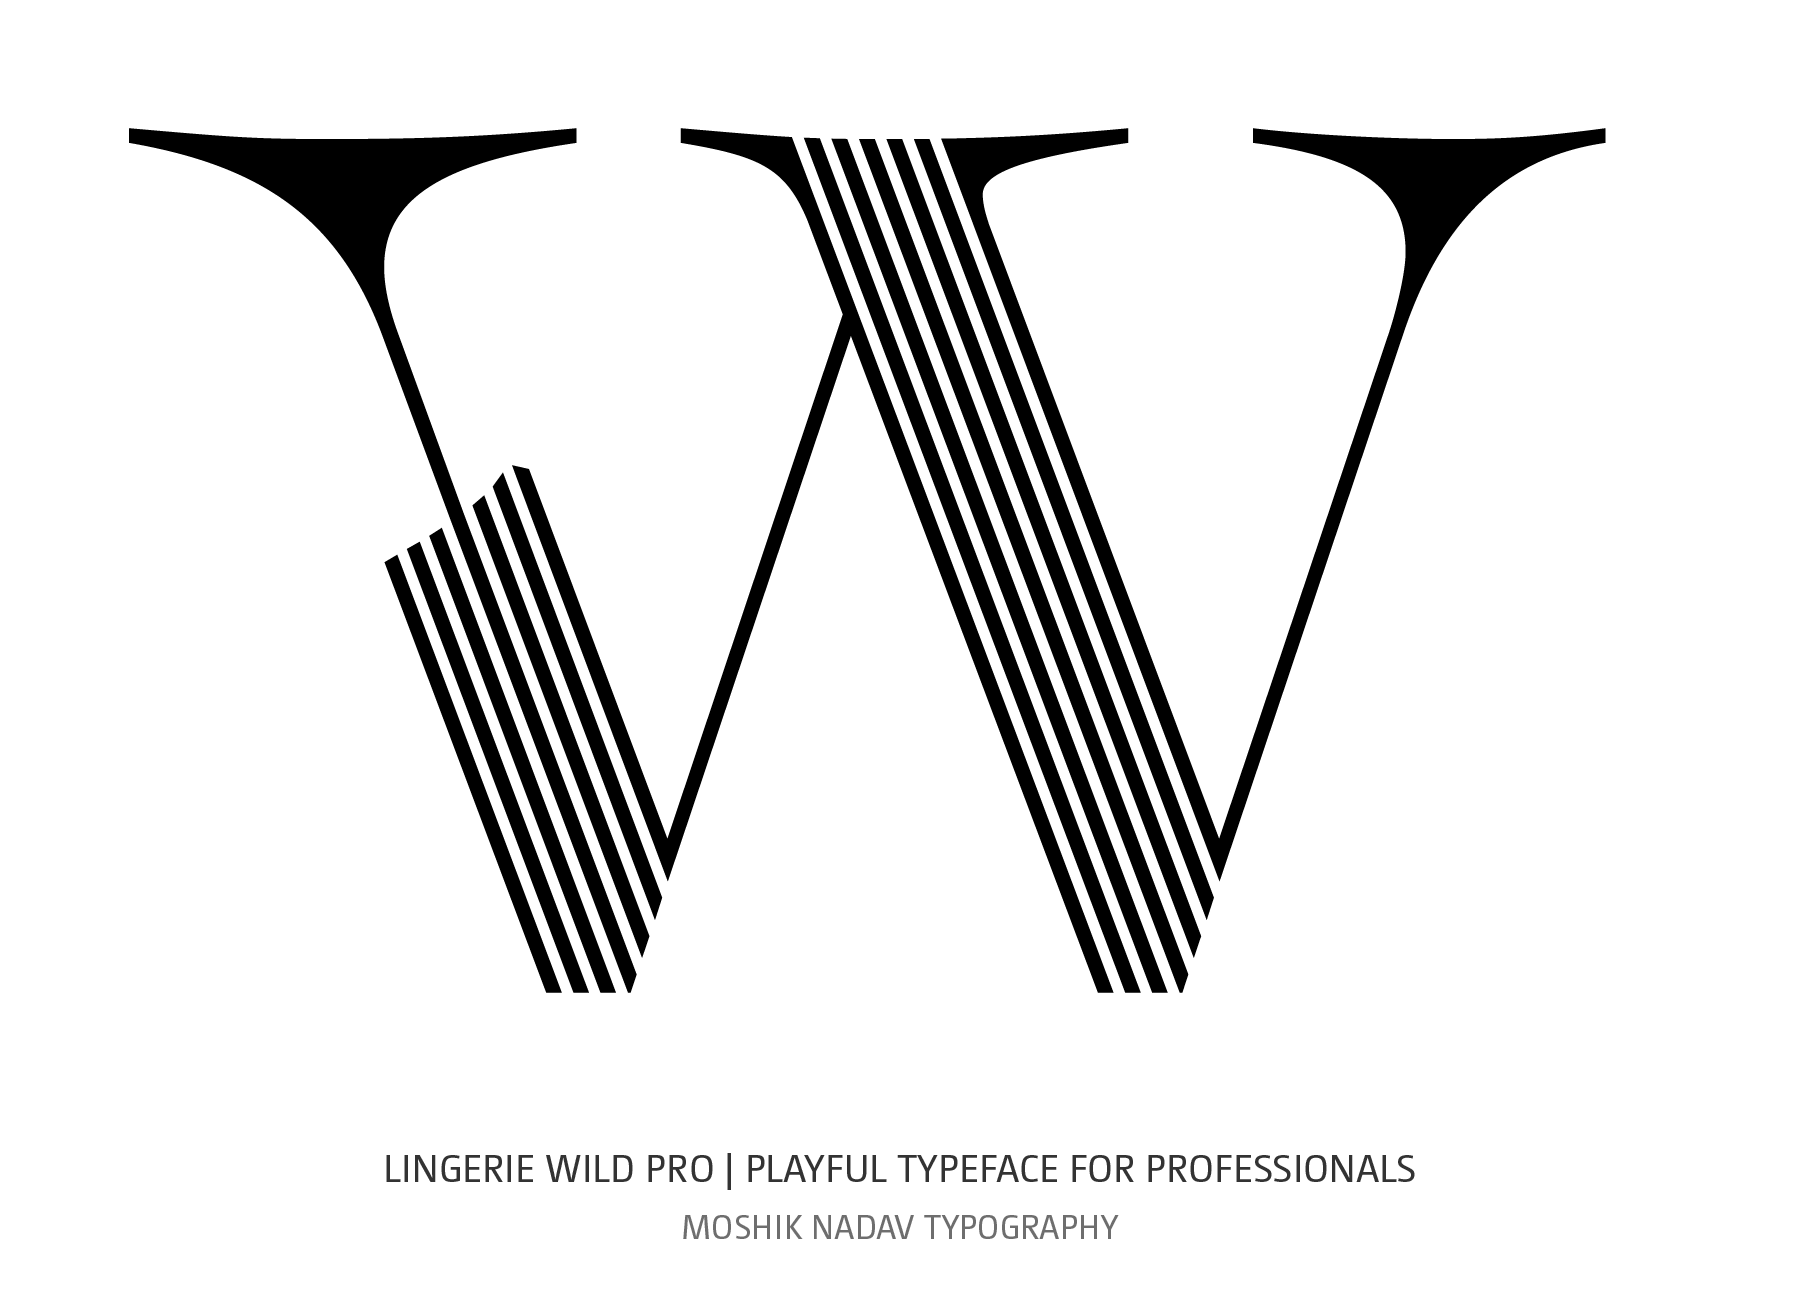 Lingerie wild Pro Typeface designed for fashion logos 